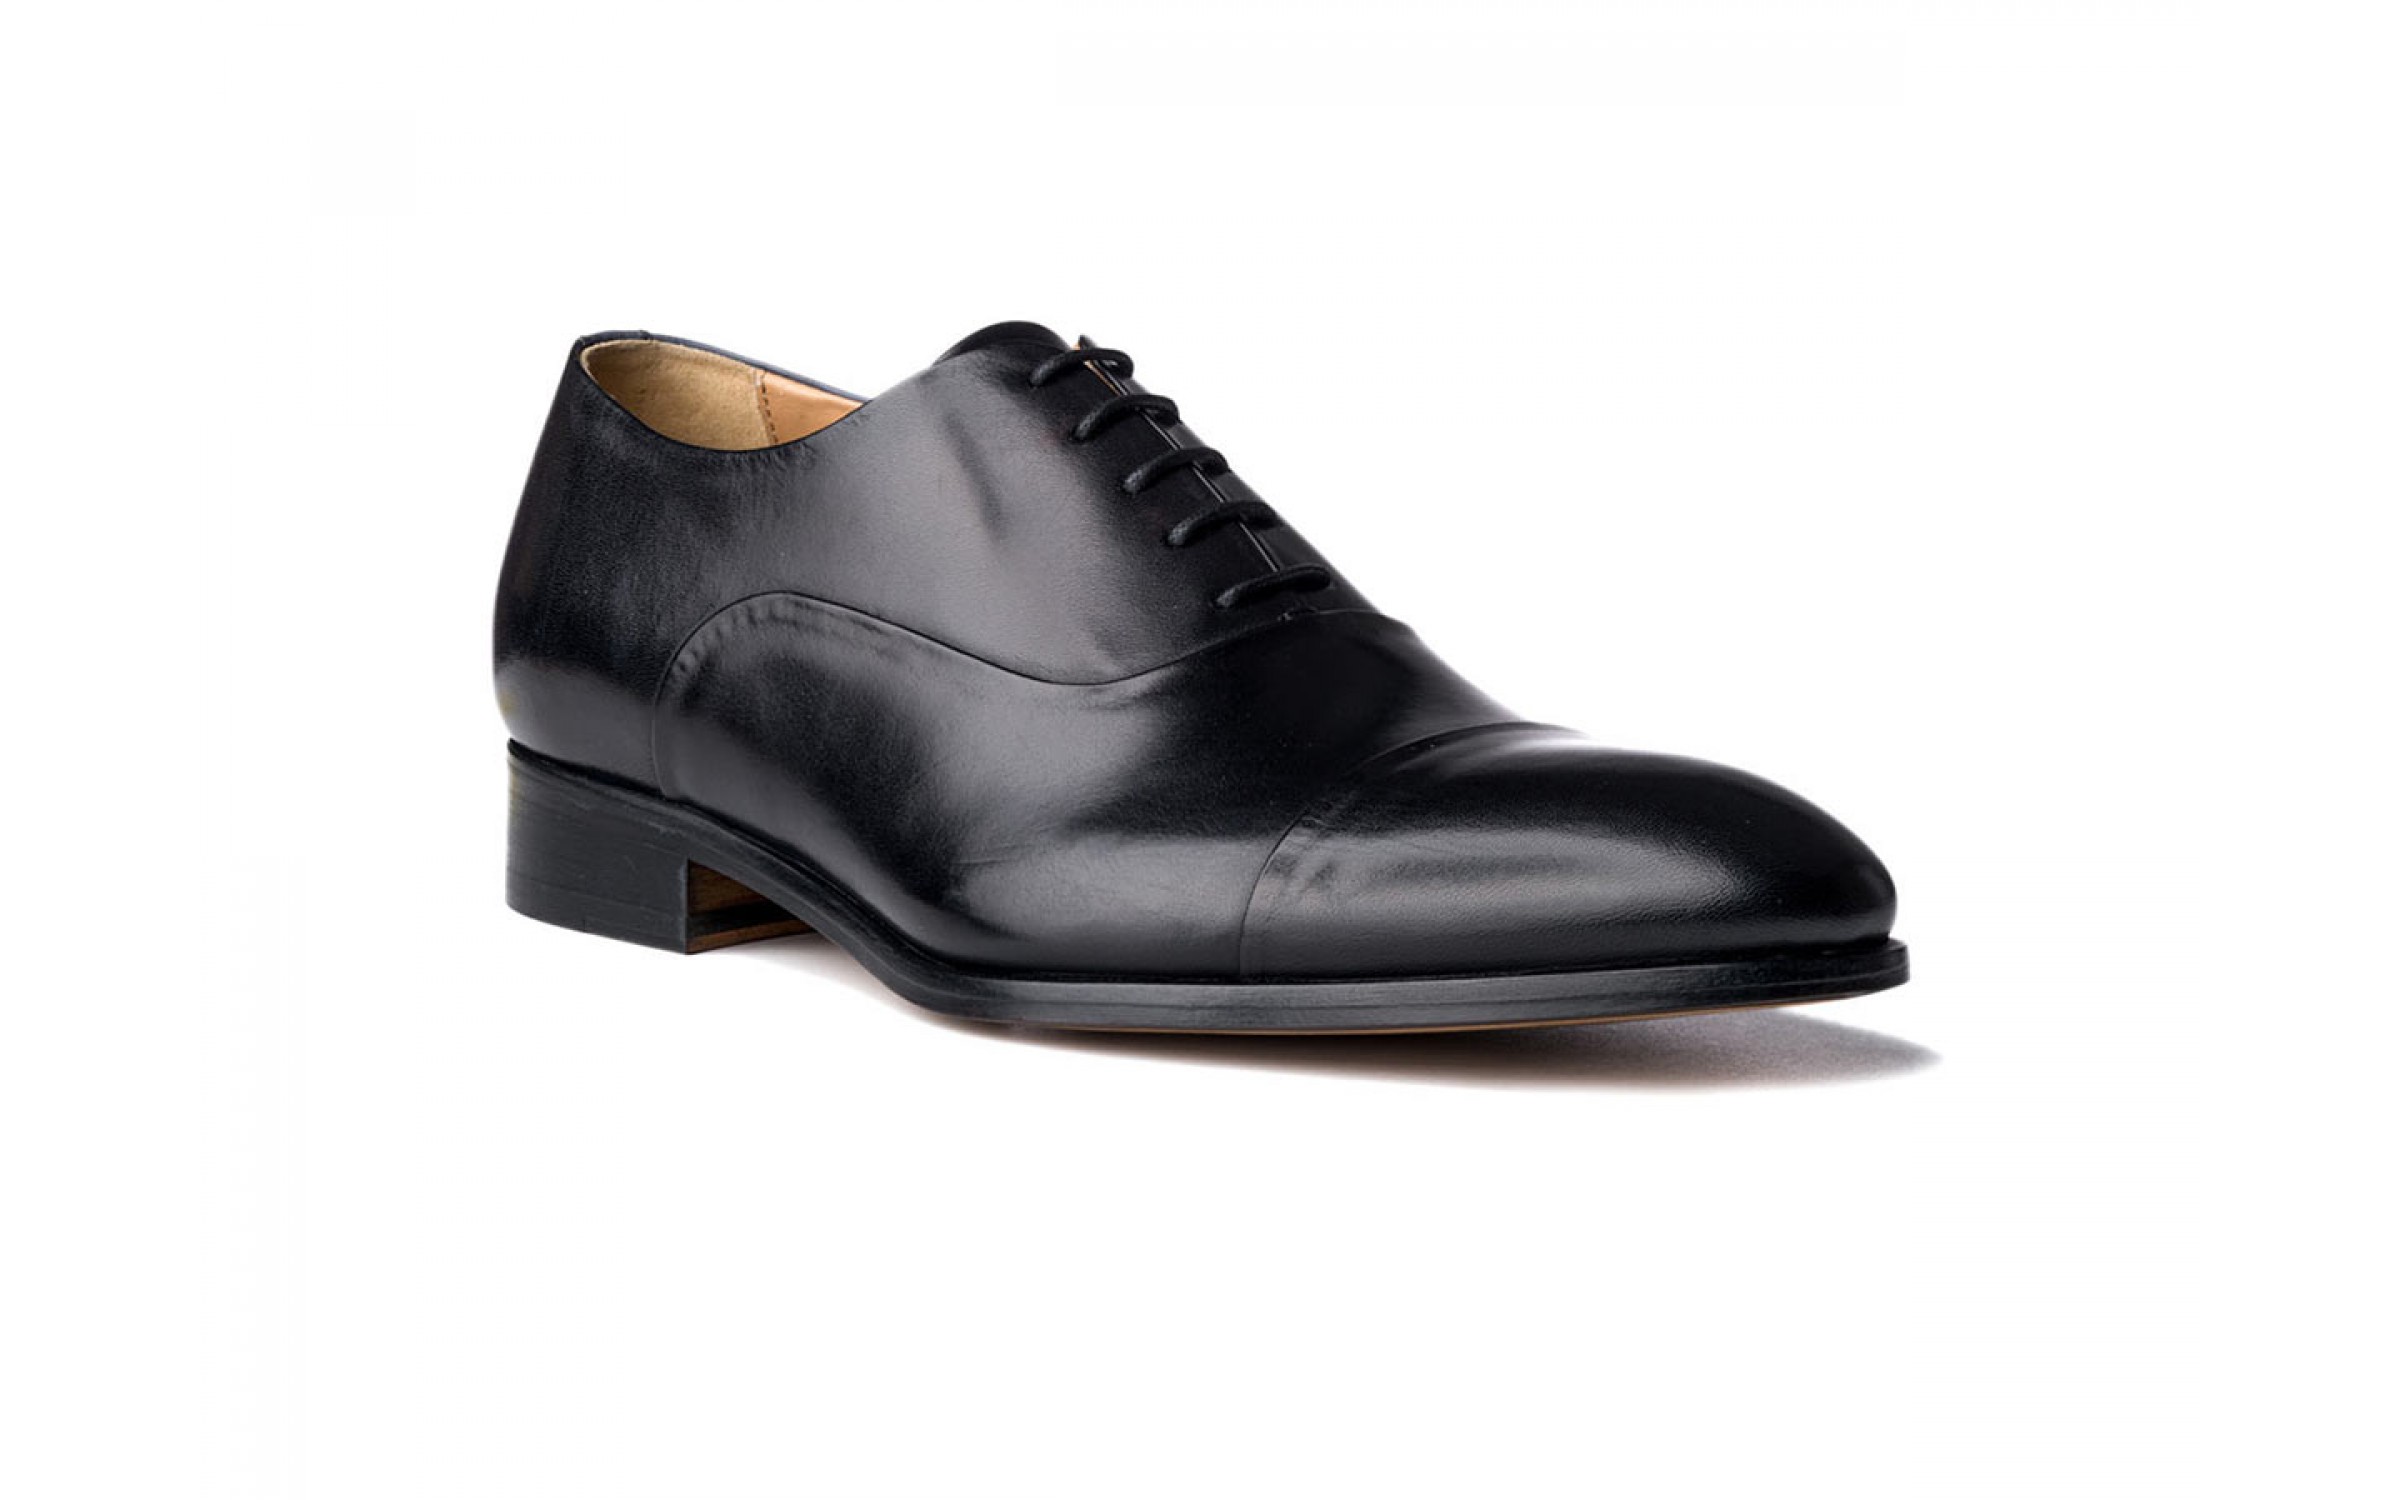 Cap Toe Oxford Shoes in Black Antique Italian Leather